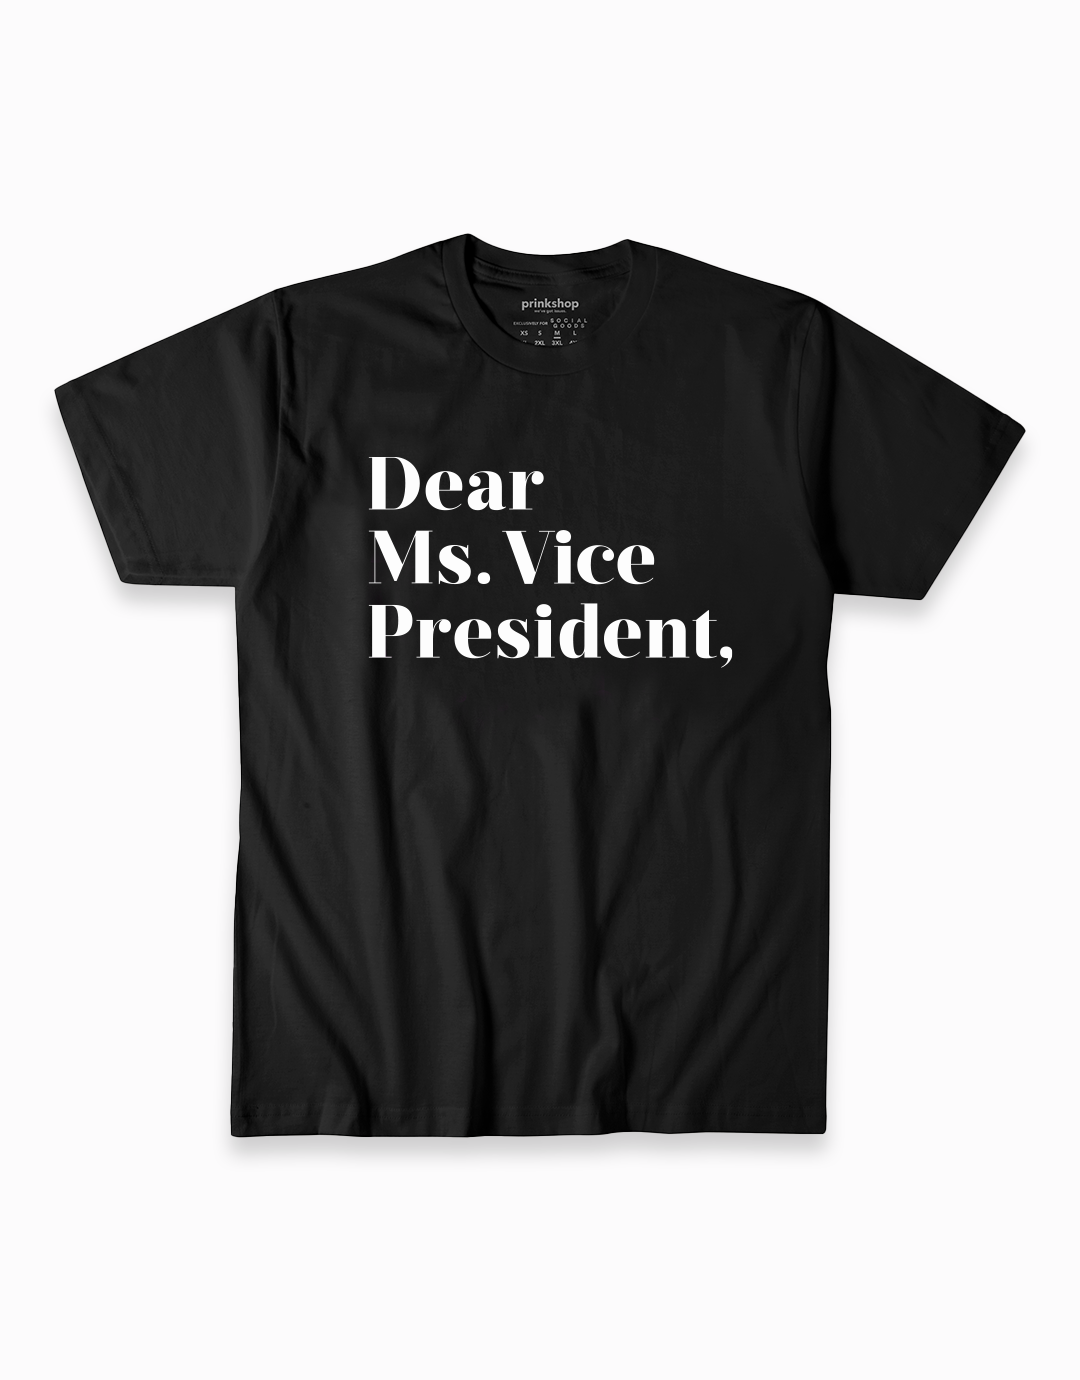 Dear Ms. Vice President Tee - Black/White